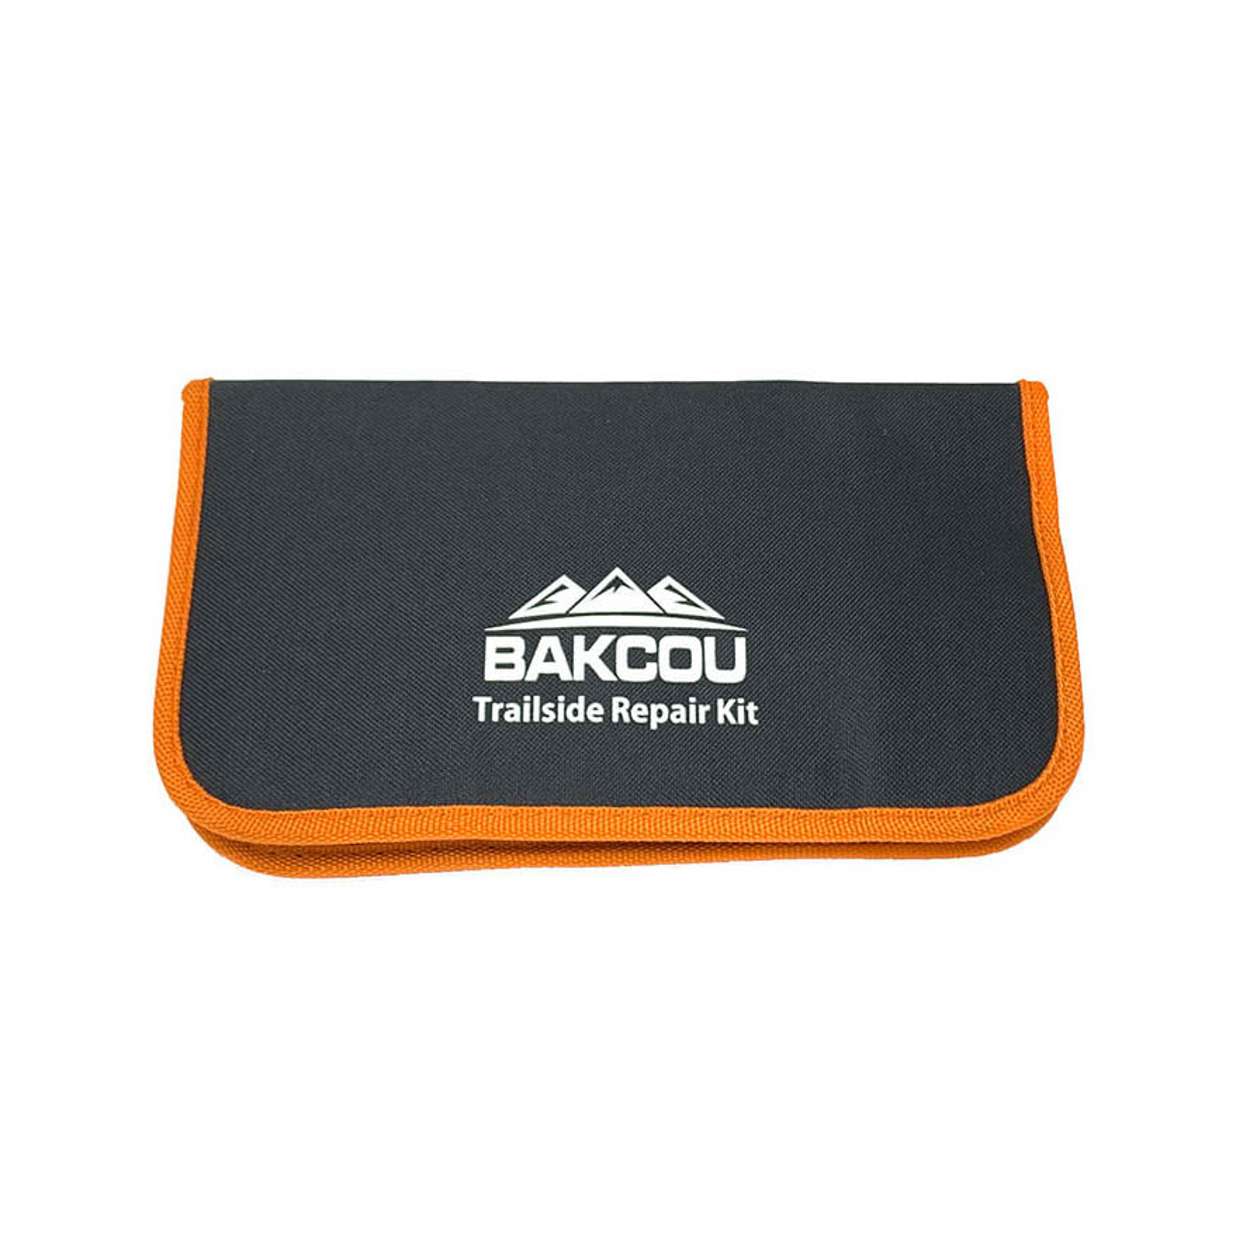 Bakcou Trailside Repair Kit